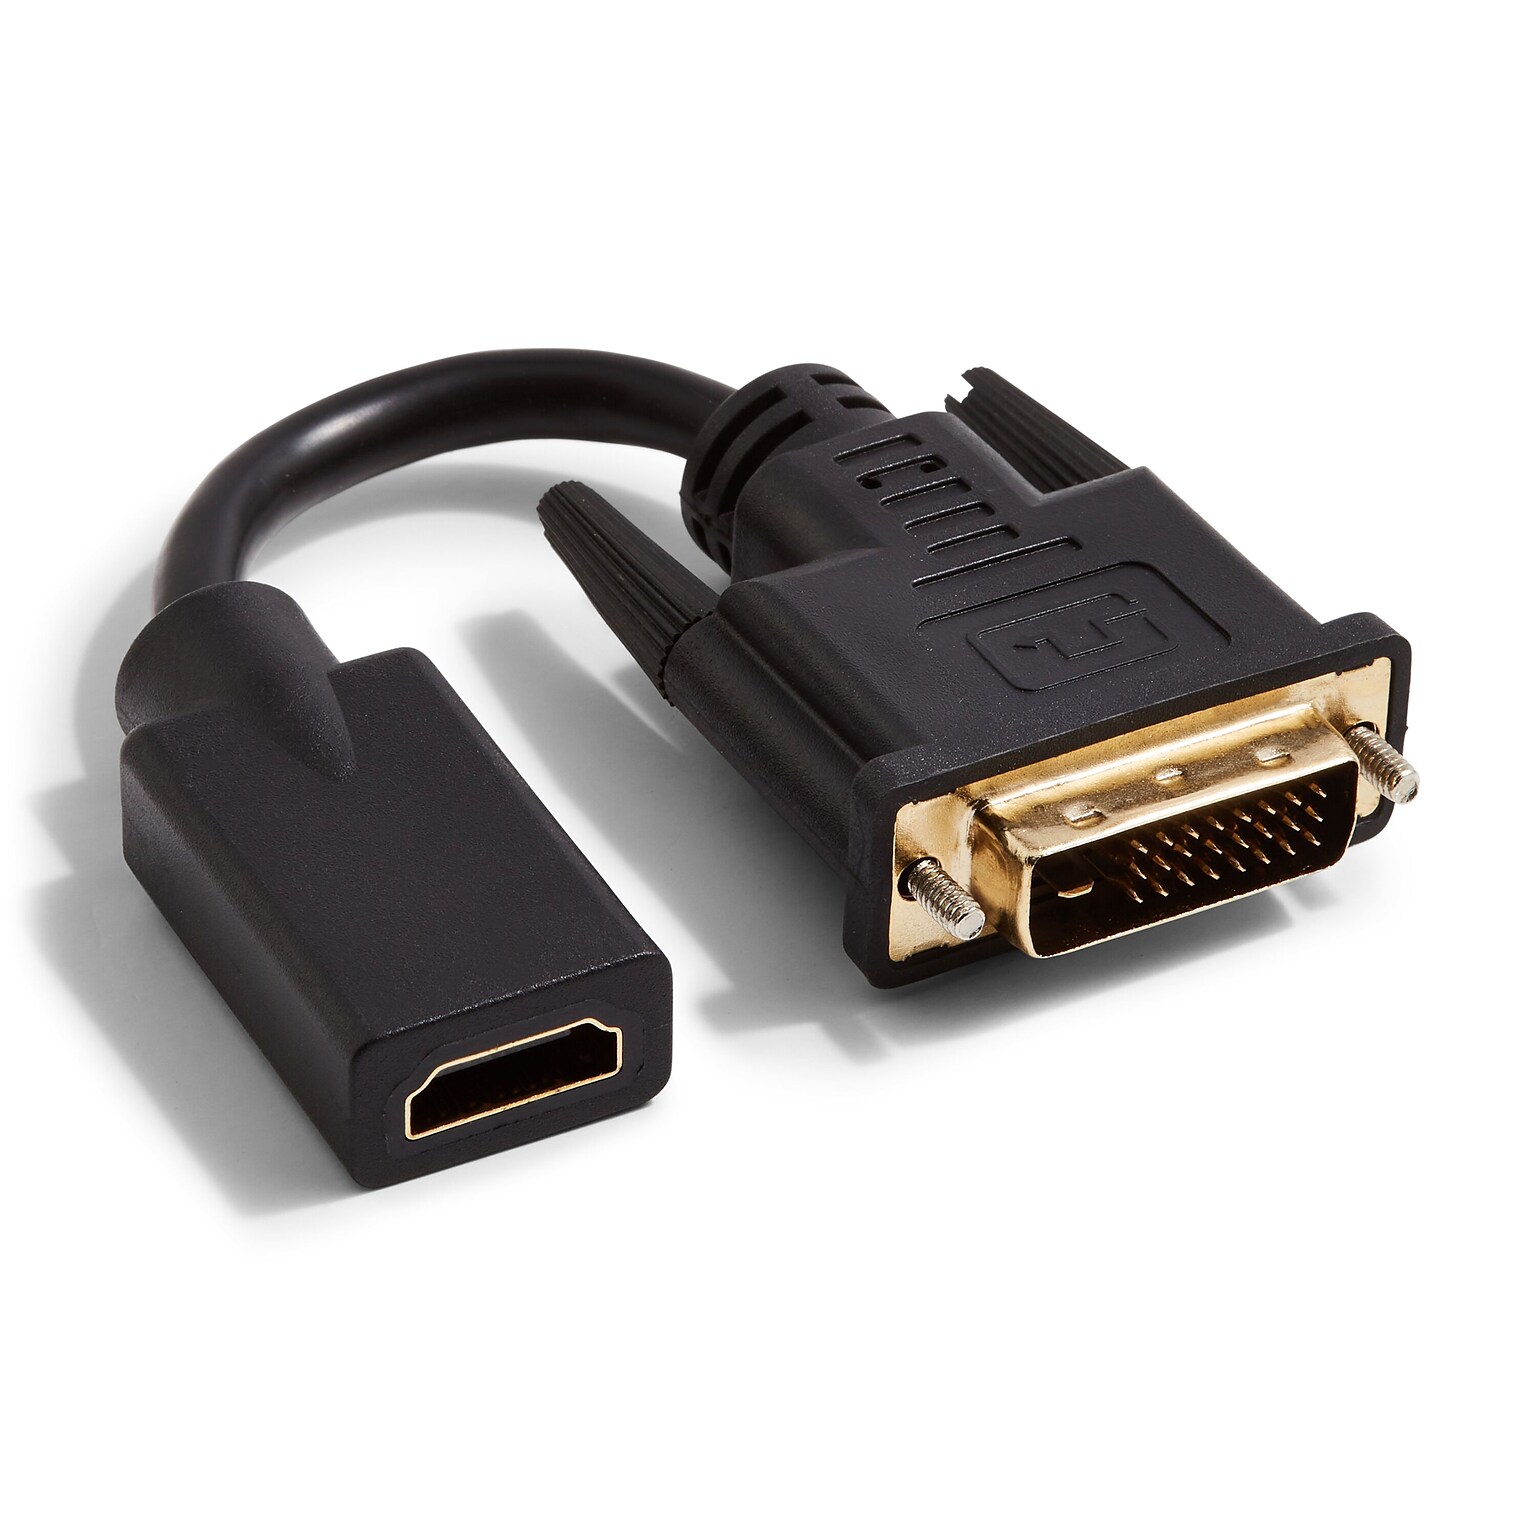 NXT Technologies™ NX50637 0.5 HDMI/DVI-D Video Adapter, Black